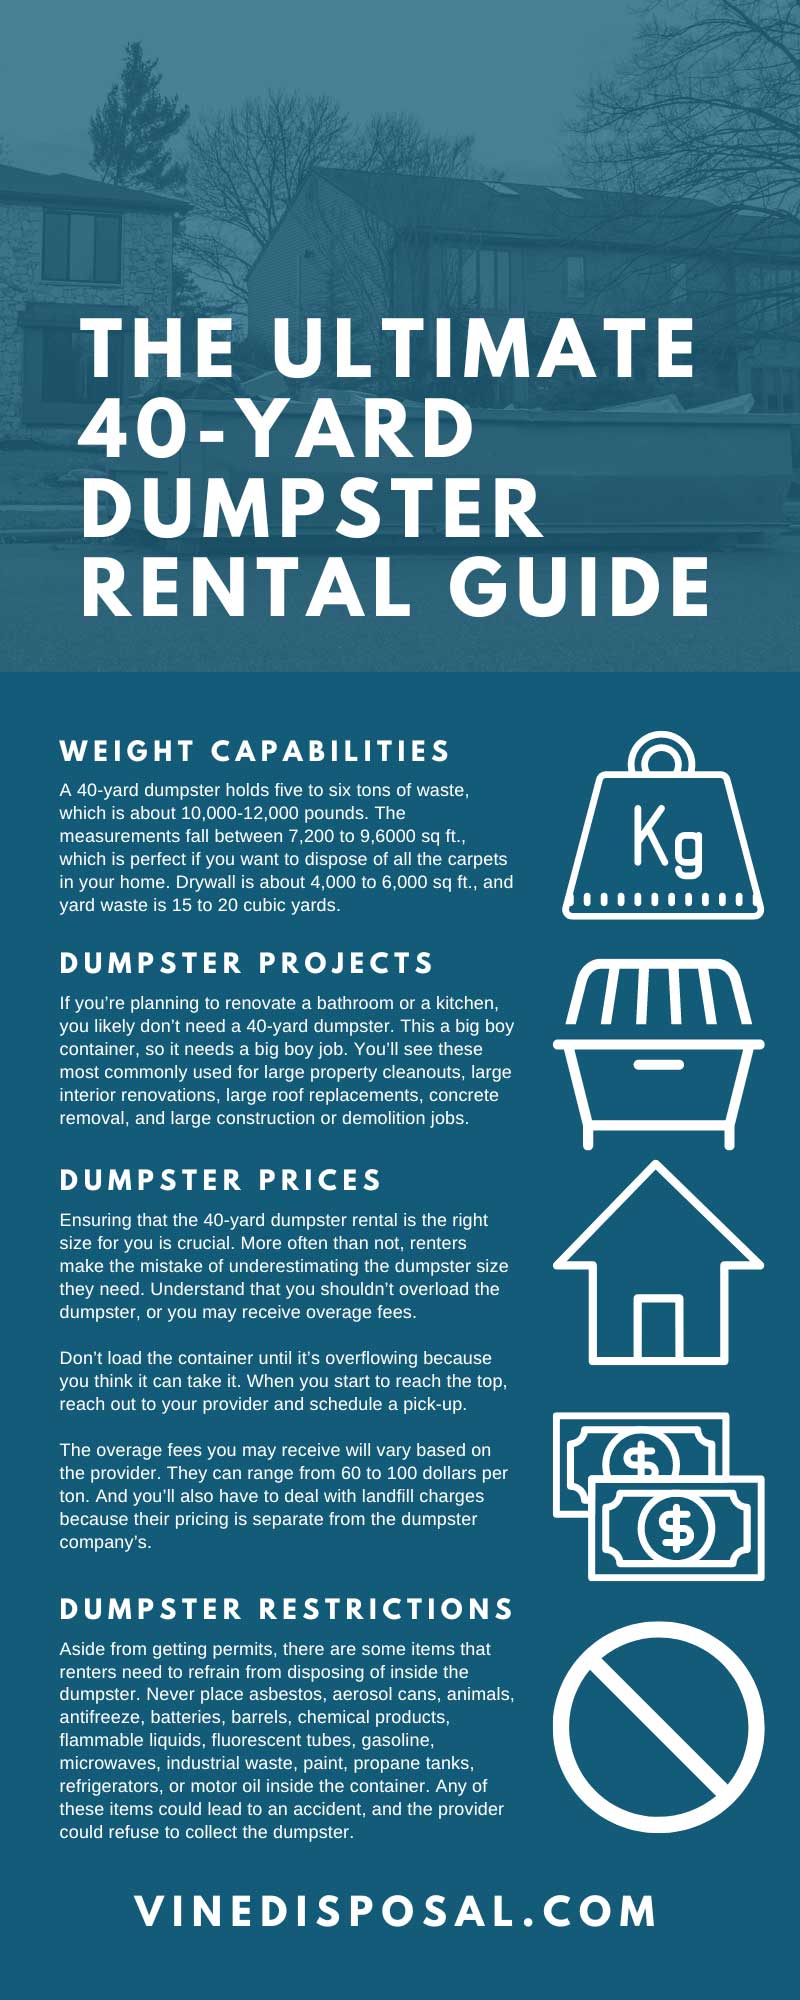 The Ultimate 40-Yard Dumpster Rental Guide